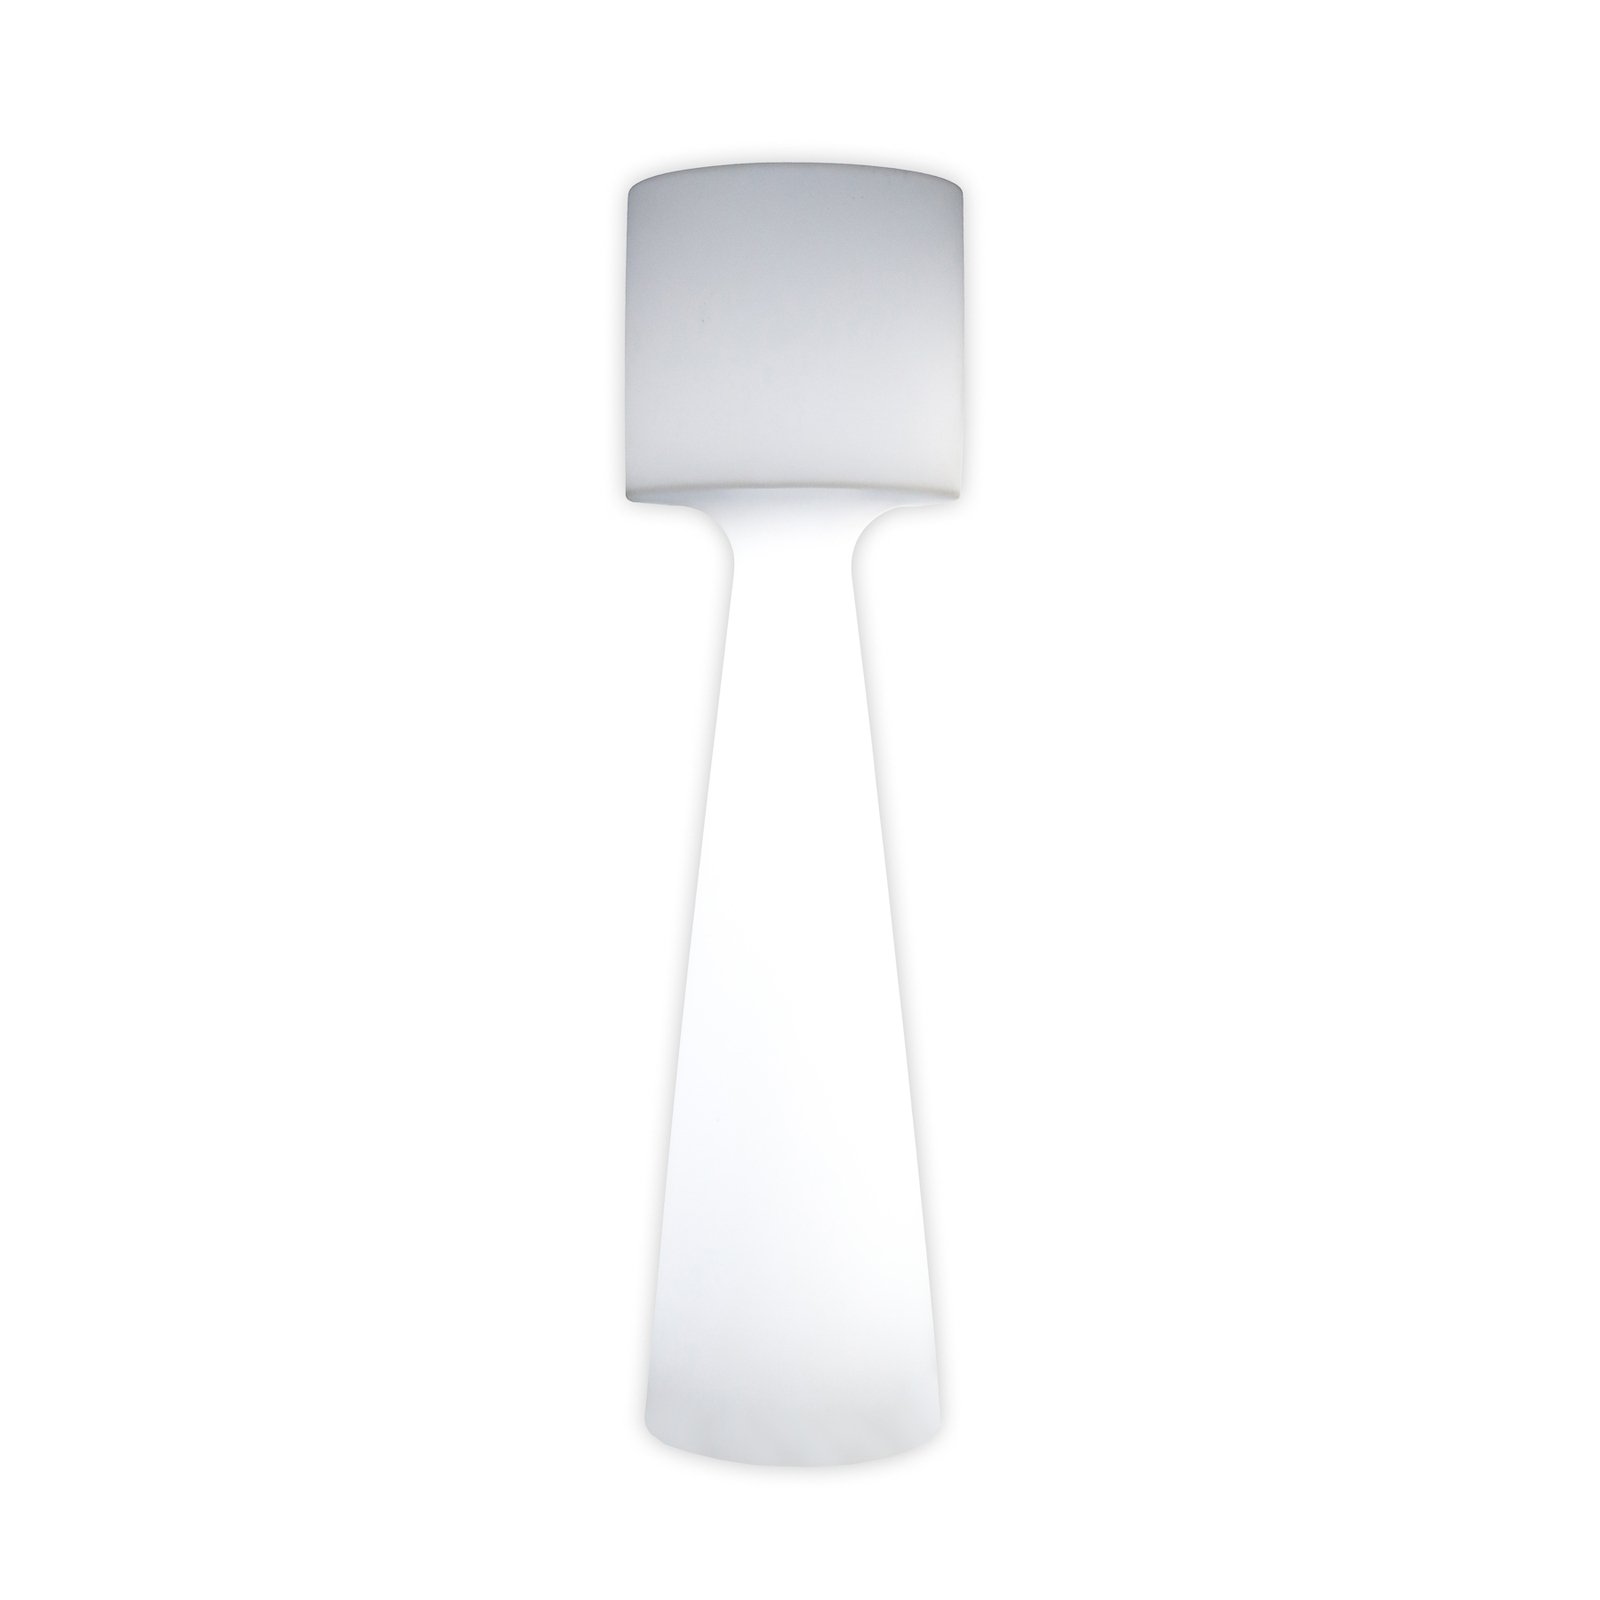 Newgarden Grace lampa stojąca LED IP65 biała, 170 cm